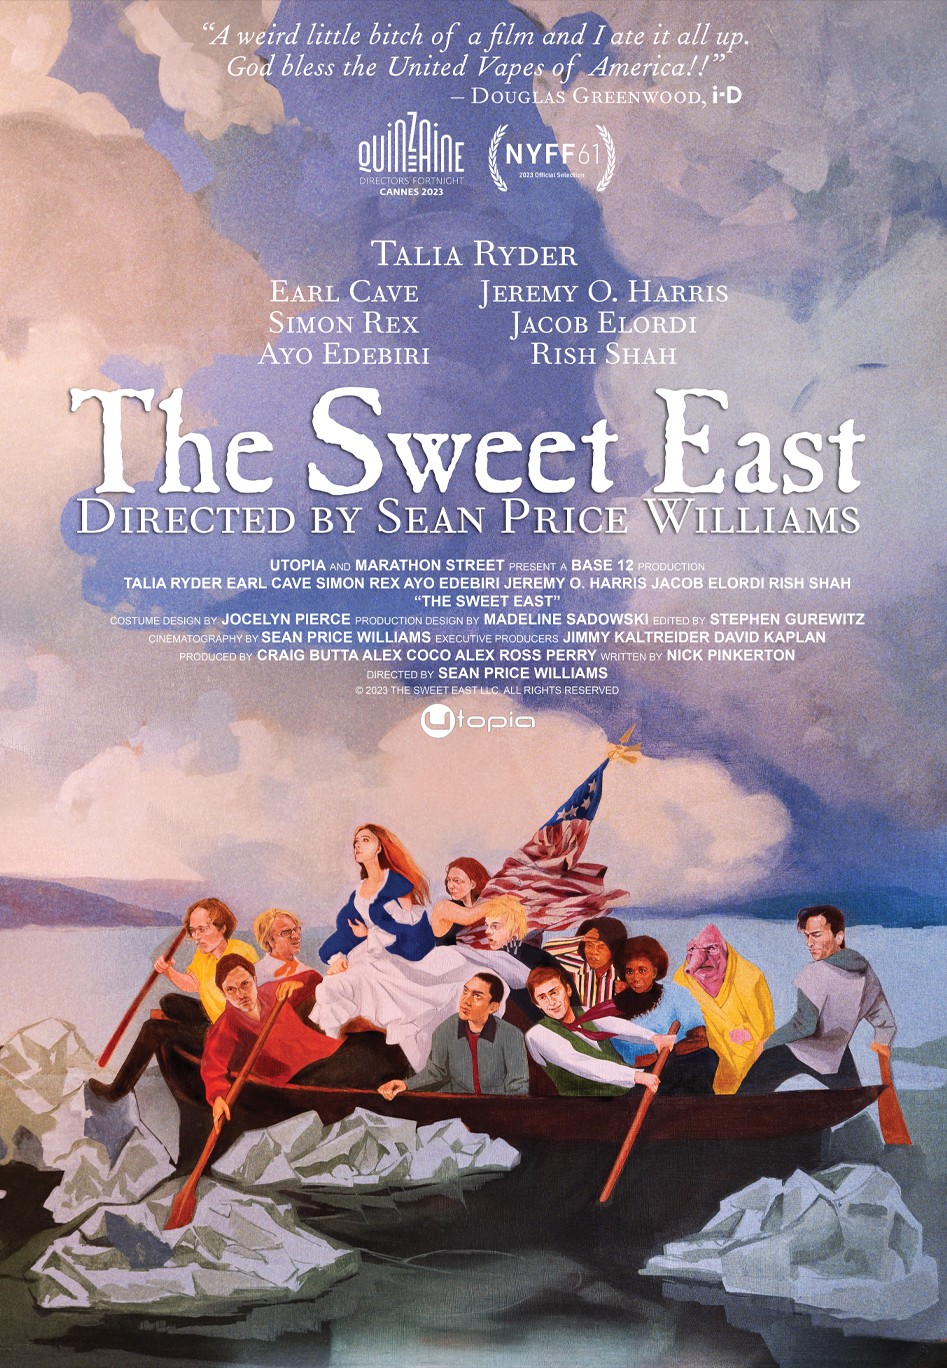 SEAN PRICE WILLIAMS' 'THE SWEET EAST'